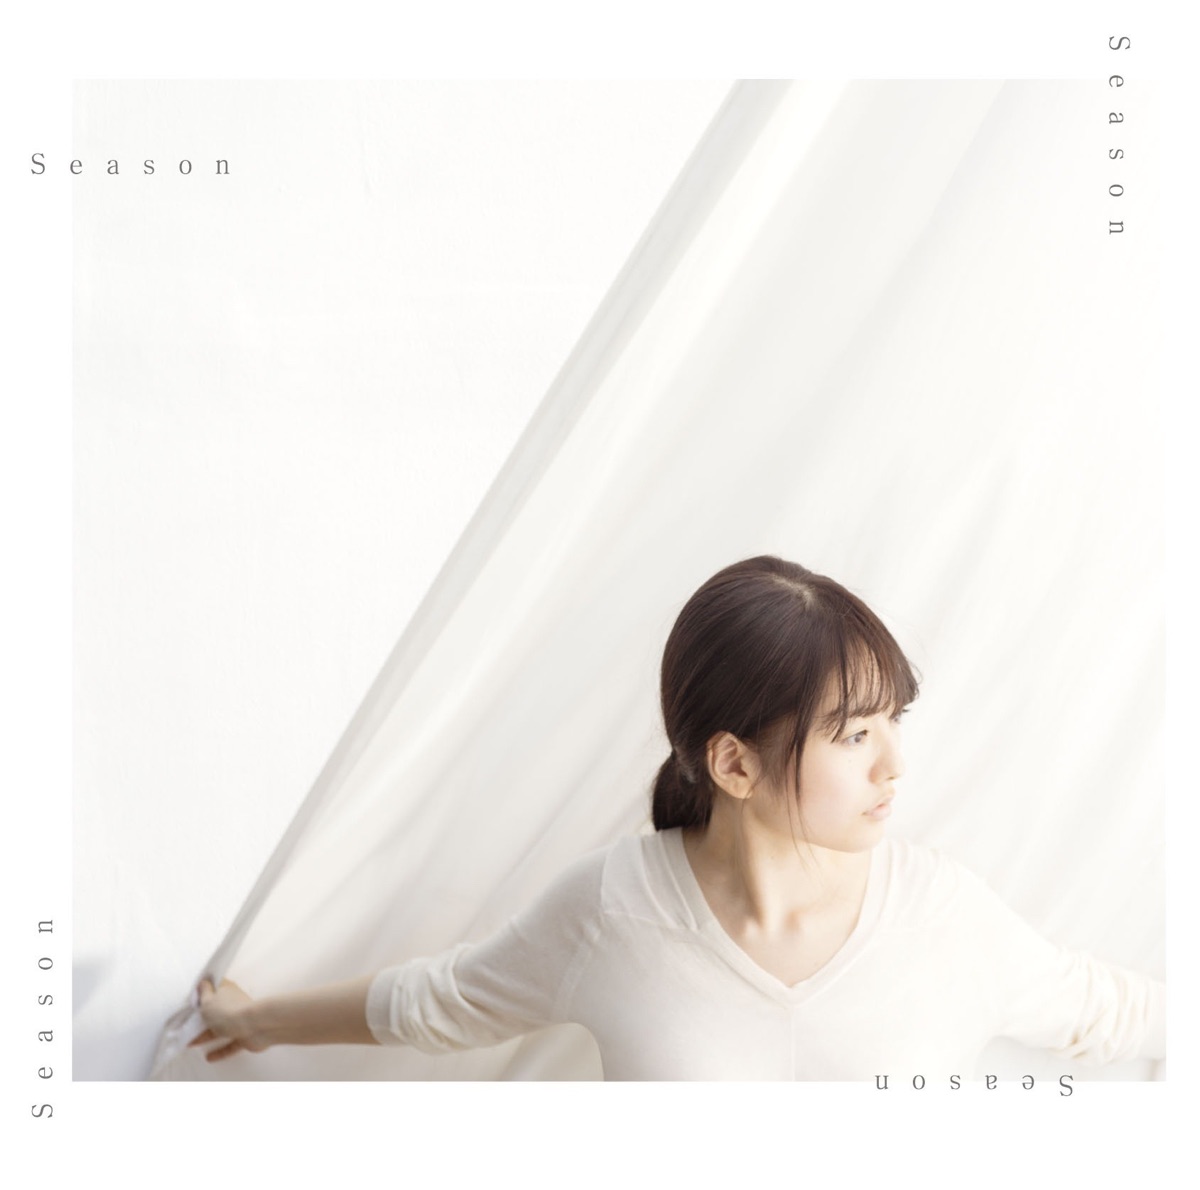 Cover for『Alisa Takigawa - Season』from the release『Season』